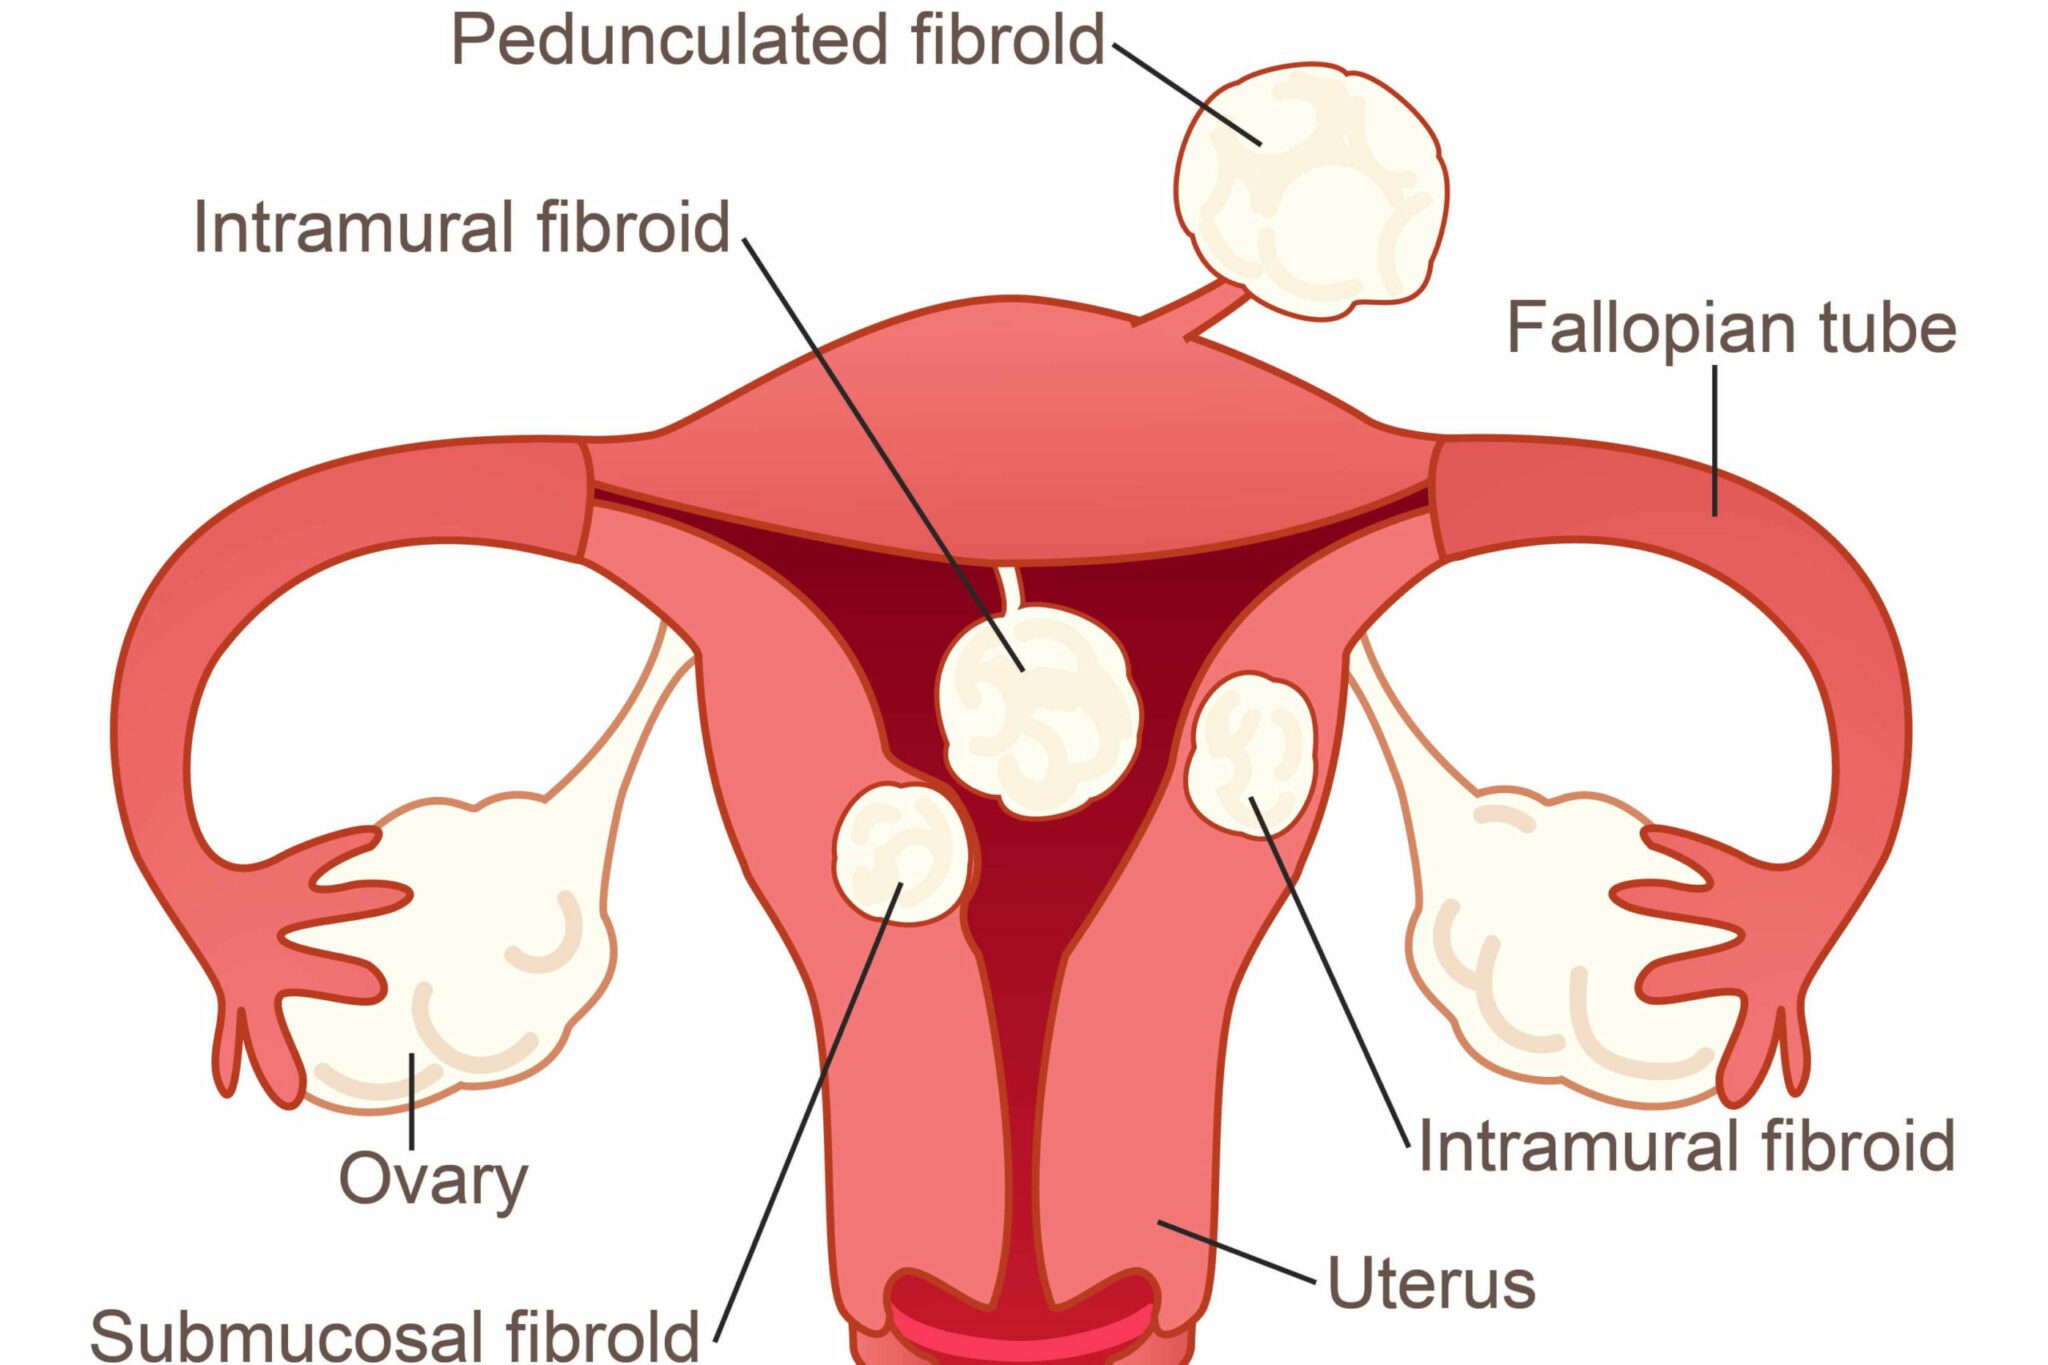 thesis topics on fibroids